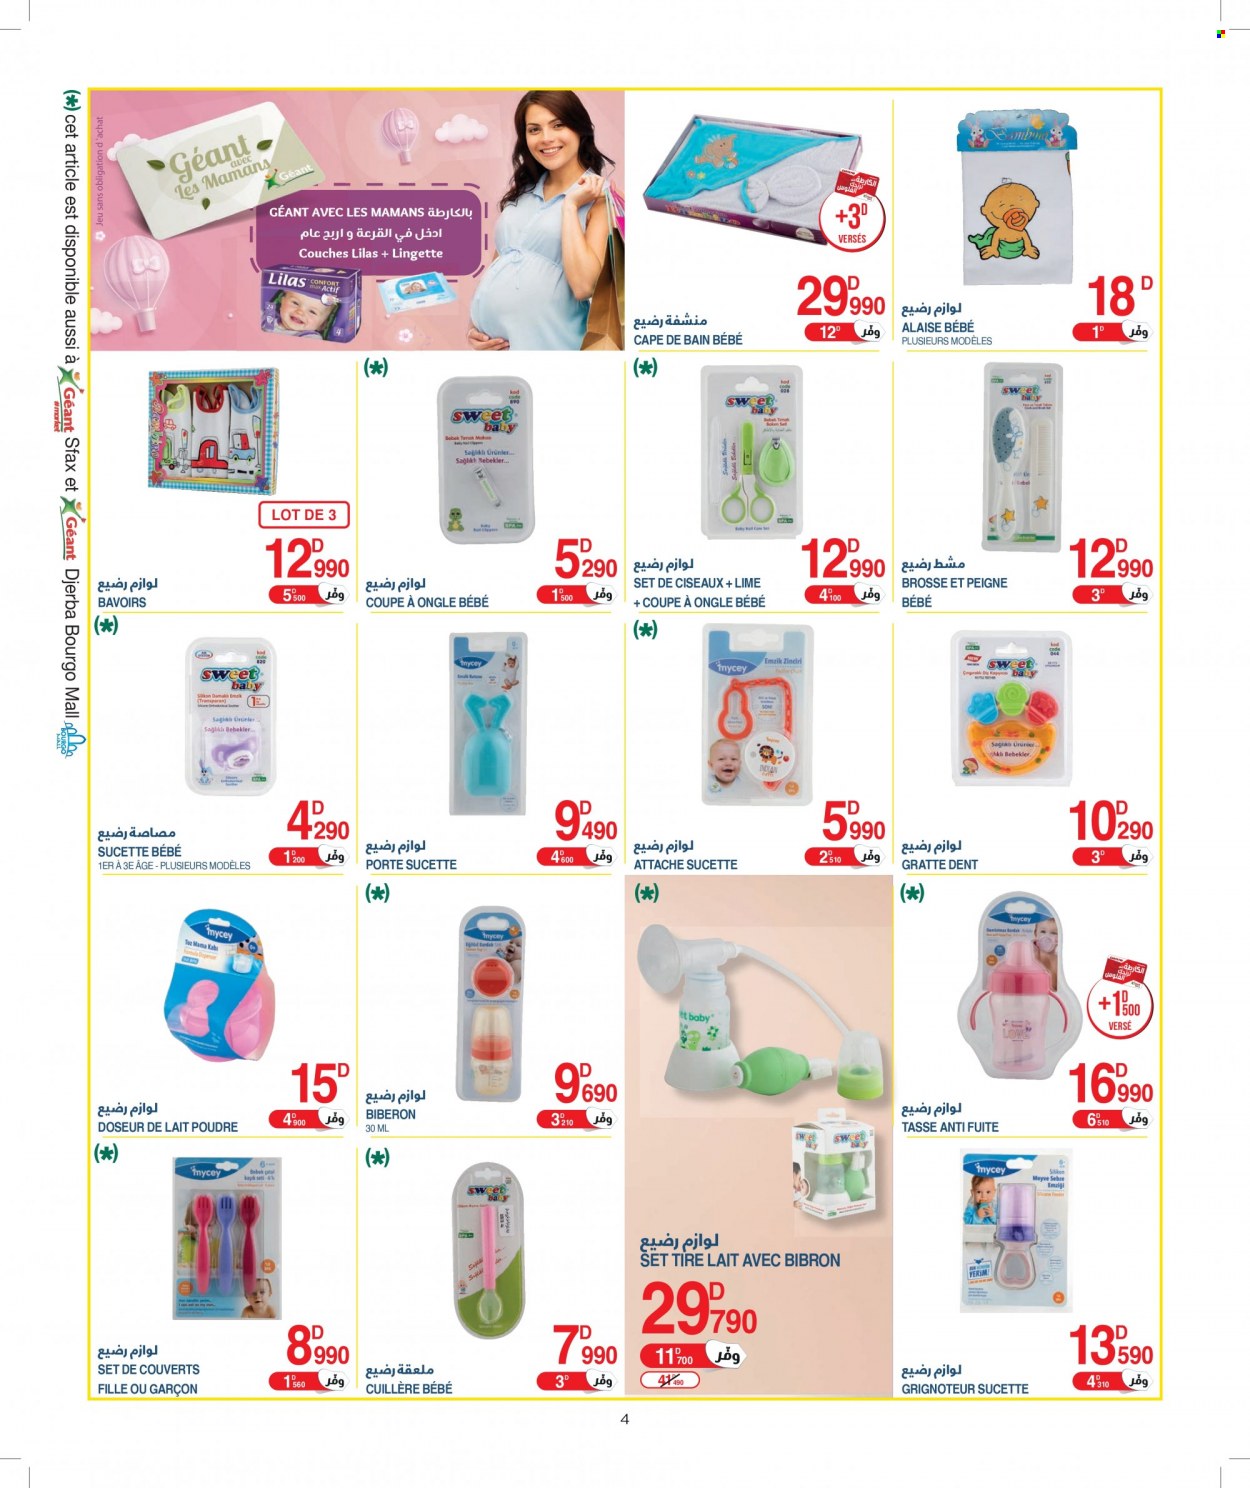 <magasin> - <du DD/MM/YYYY au DD/MM/YYYY> - Produits soldés - ,<products from flyers>. Page 4. 